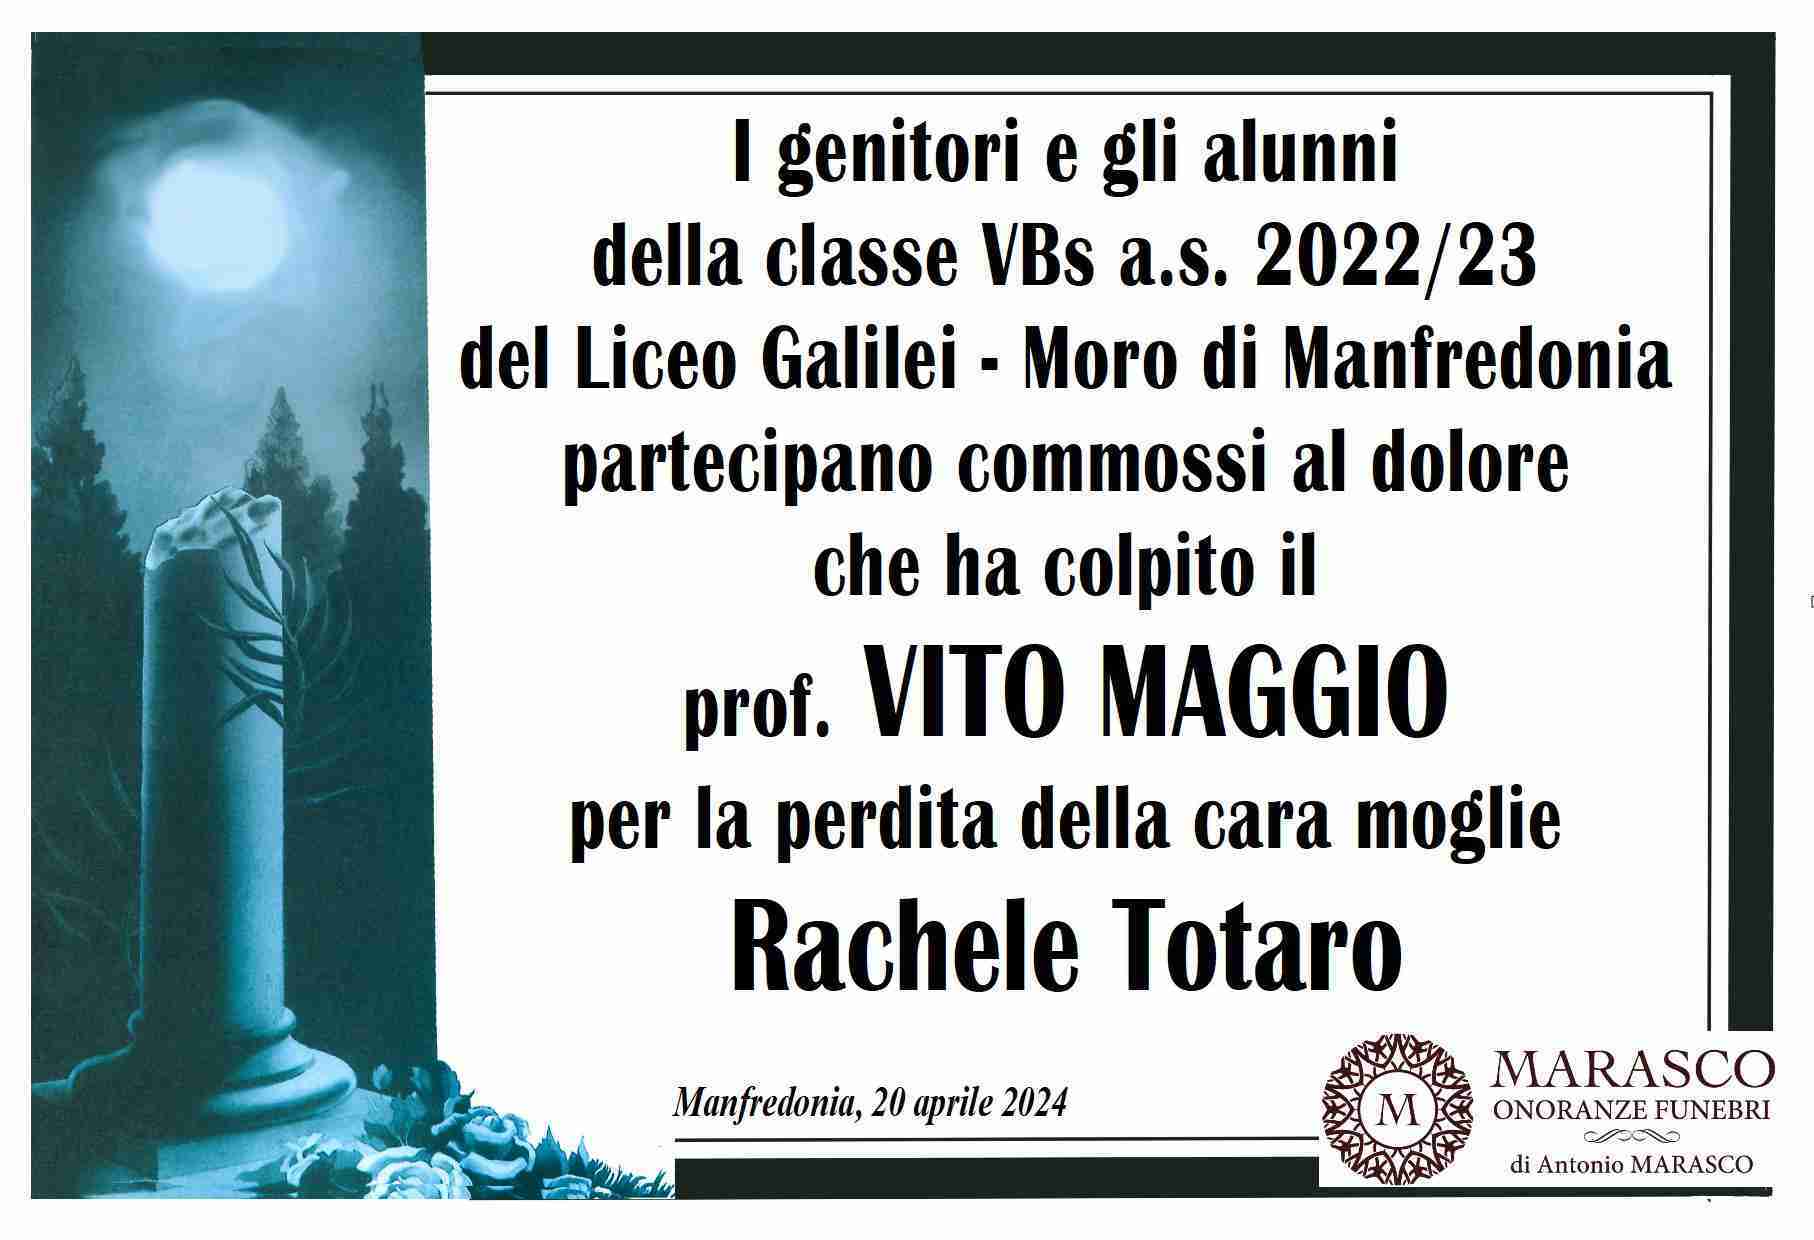 Rachele Totaro in Maggio